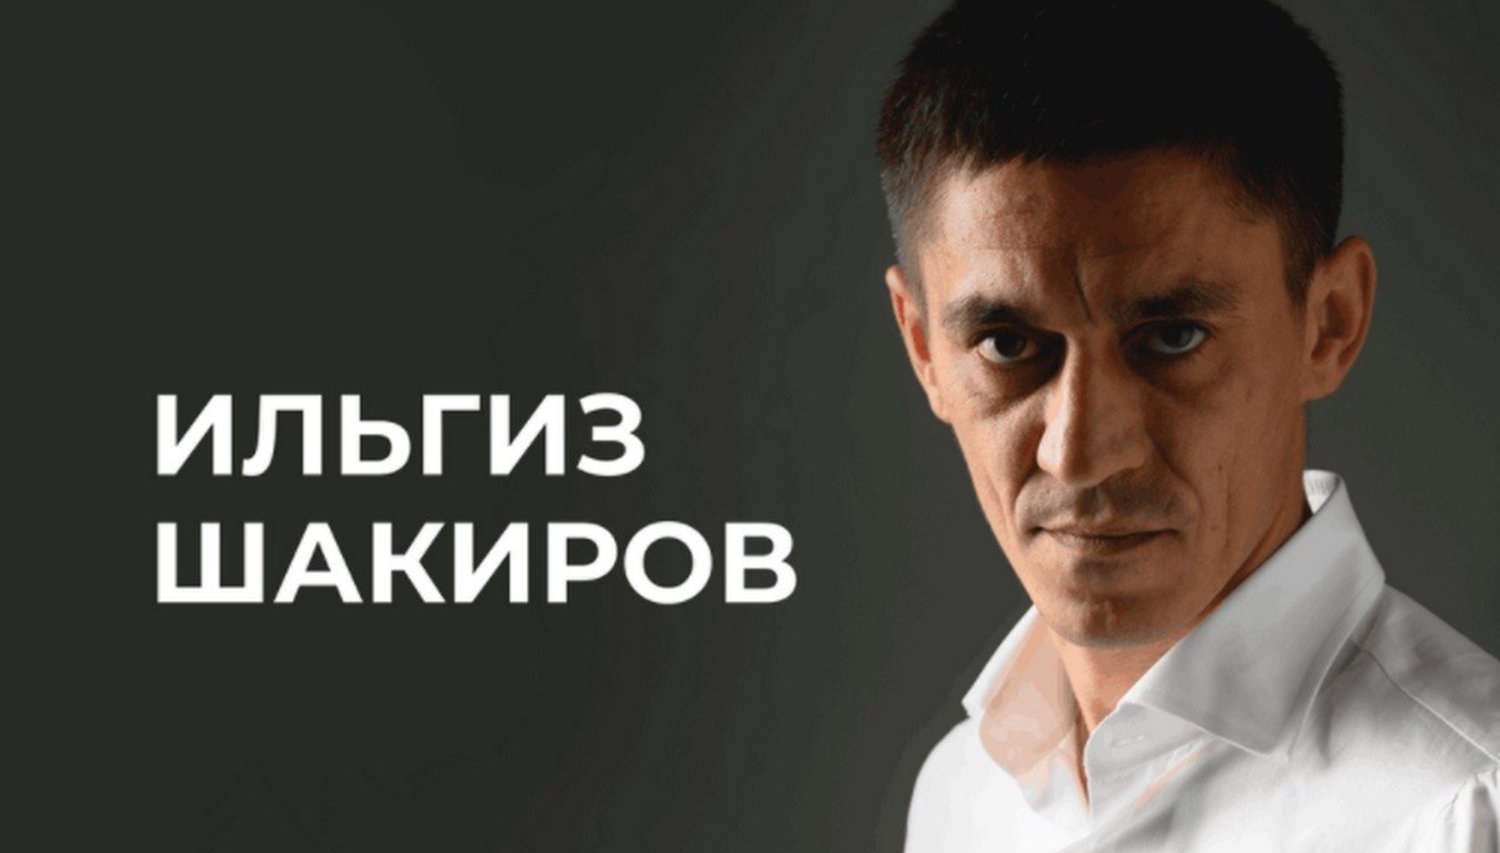 ilgiz shakirov Top Finiko Crypto Pyramid Executive Arrested in Russia’s Tatarstan